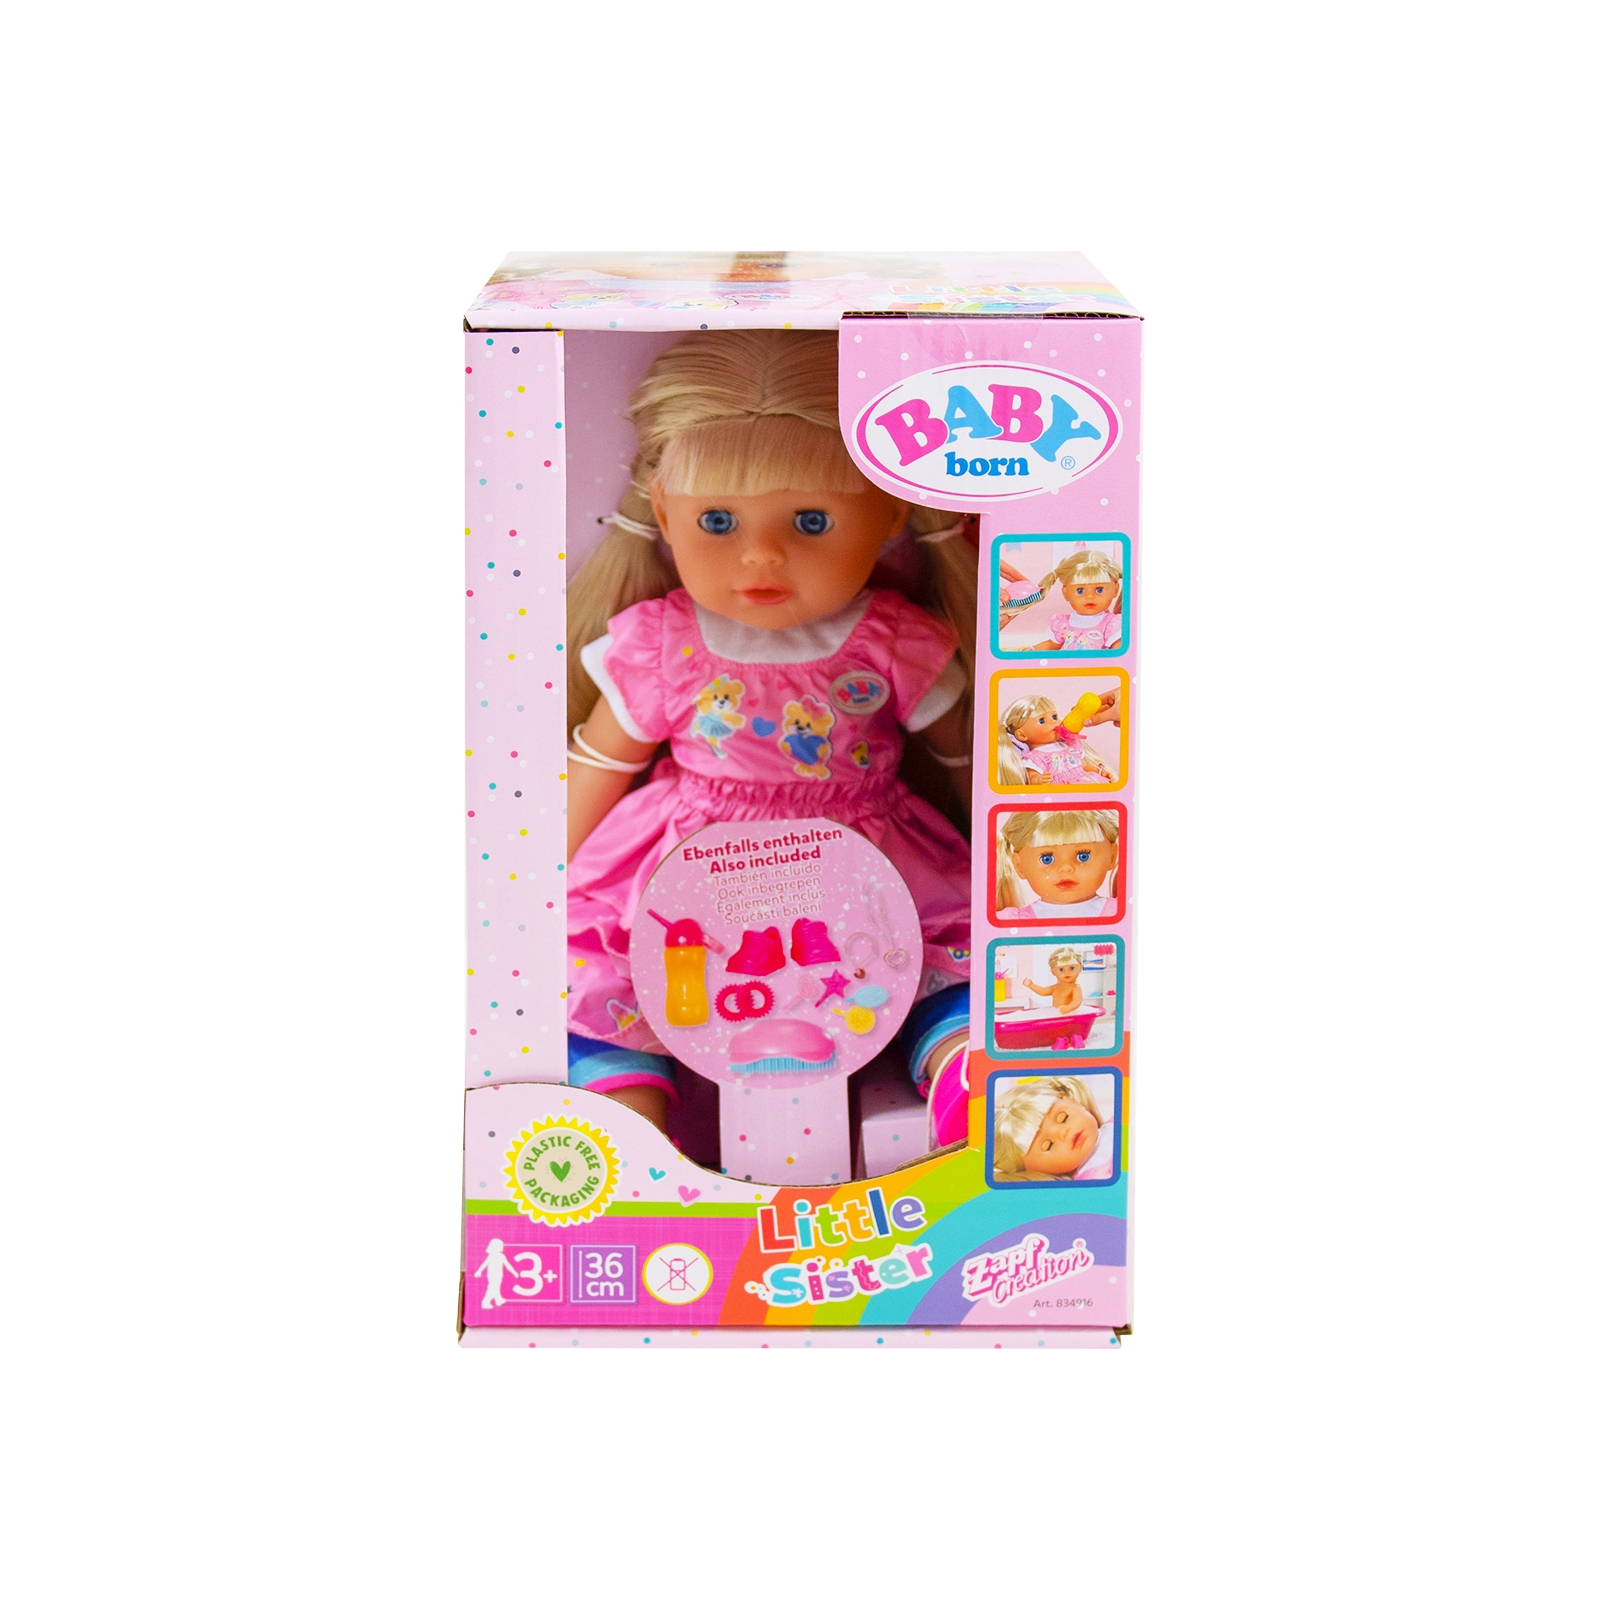 Кукла Zapf Baby Born - Младшая сестренка 36 см (834916) изображение 3